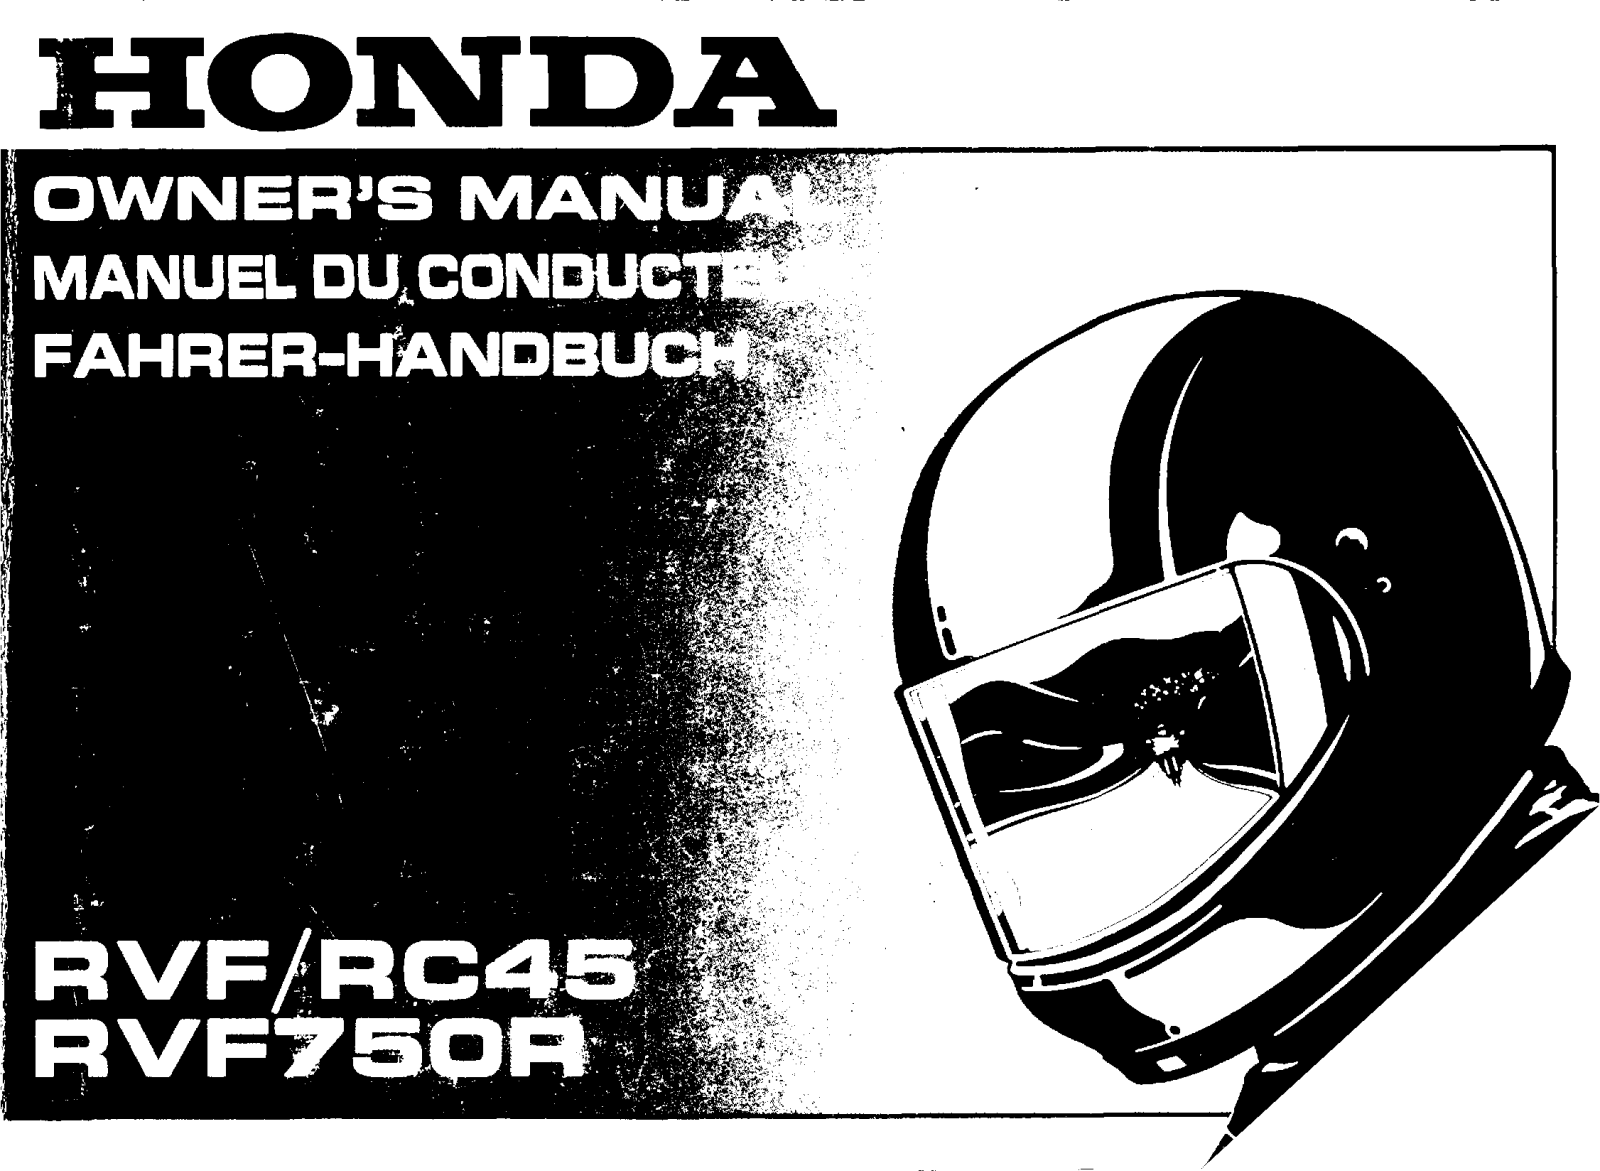 Honda RVF, RC45, RVF750R 1993 Owner's Manual